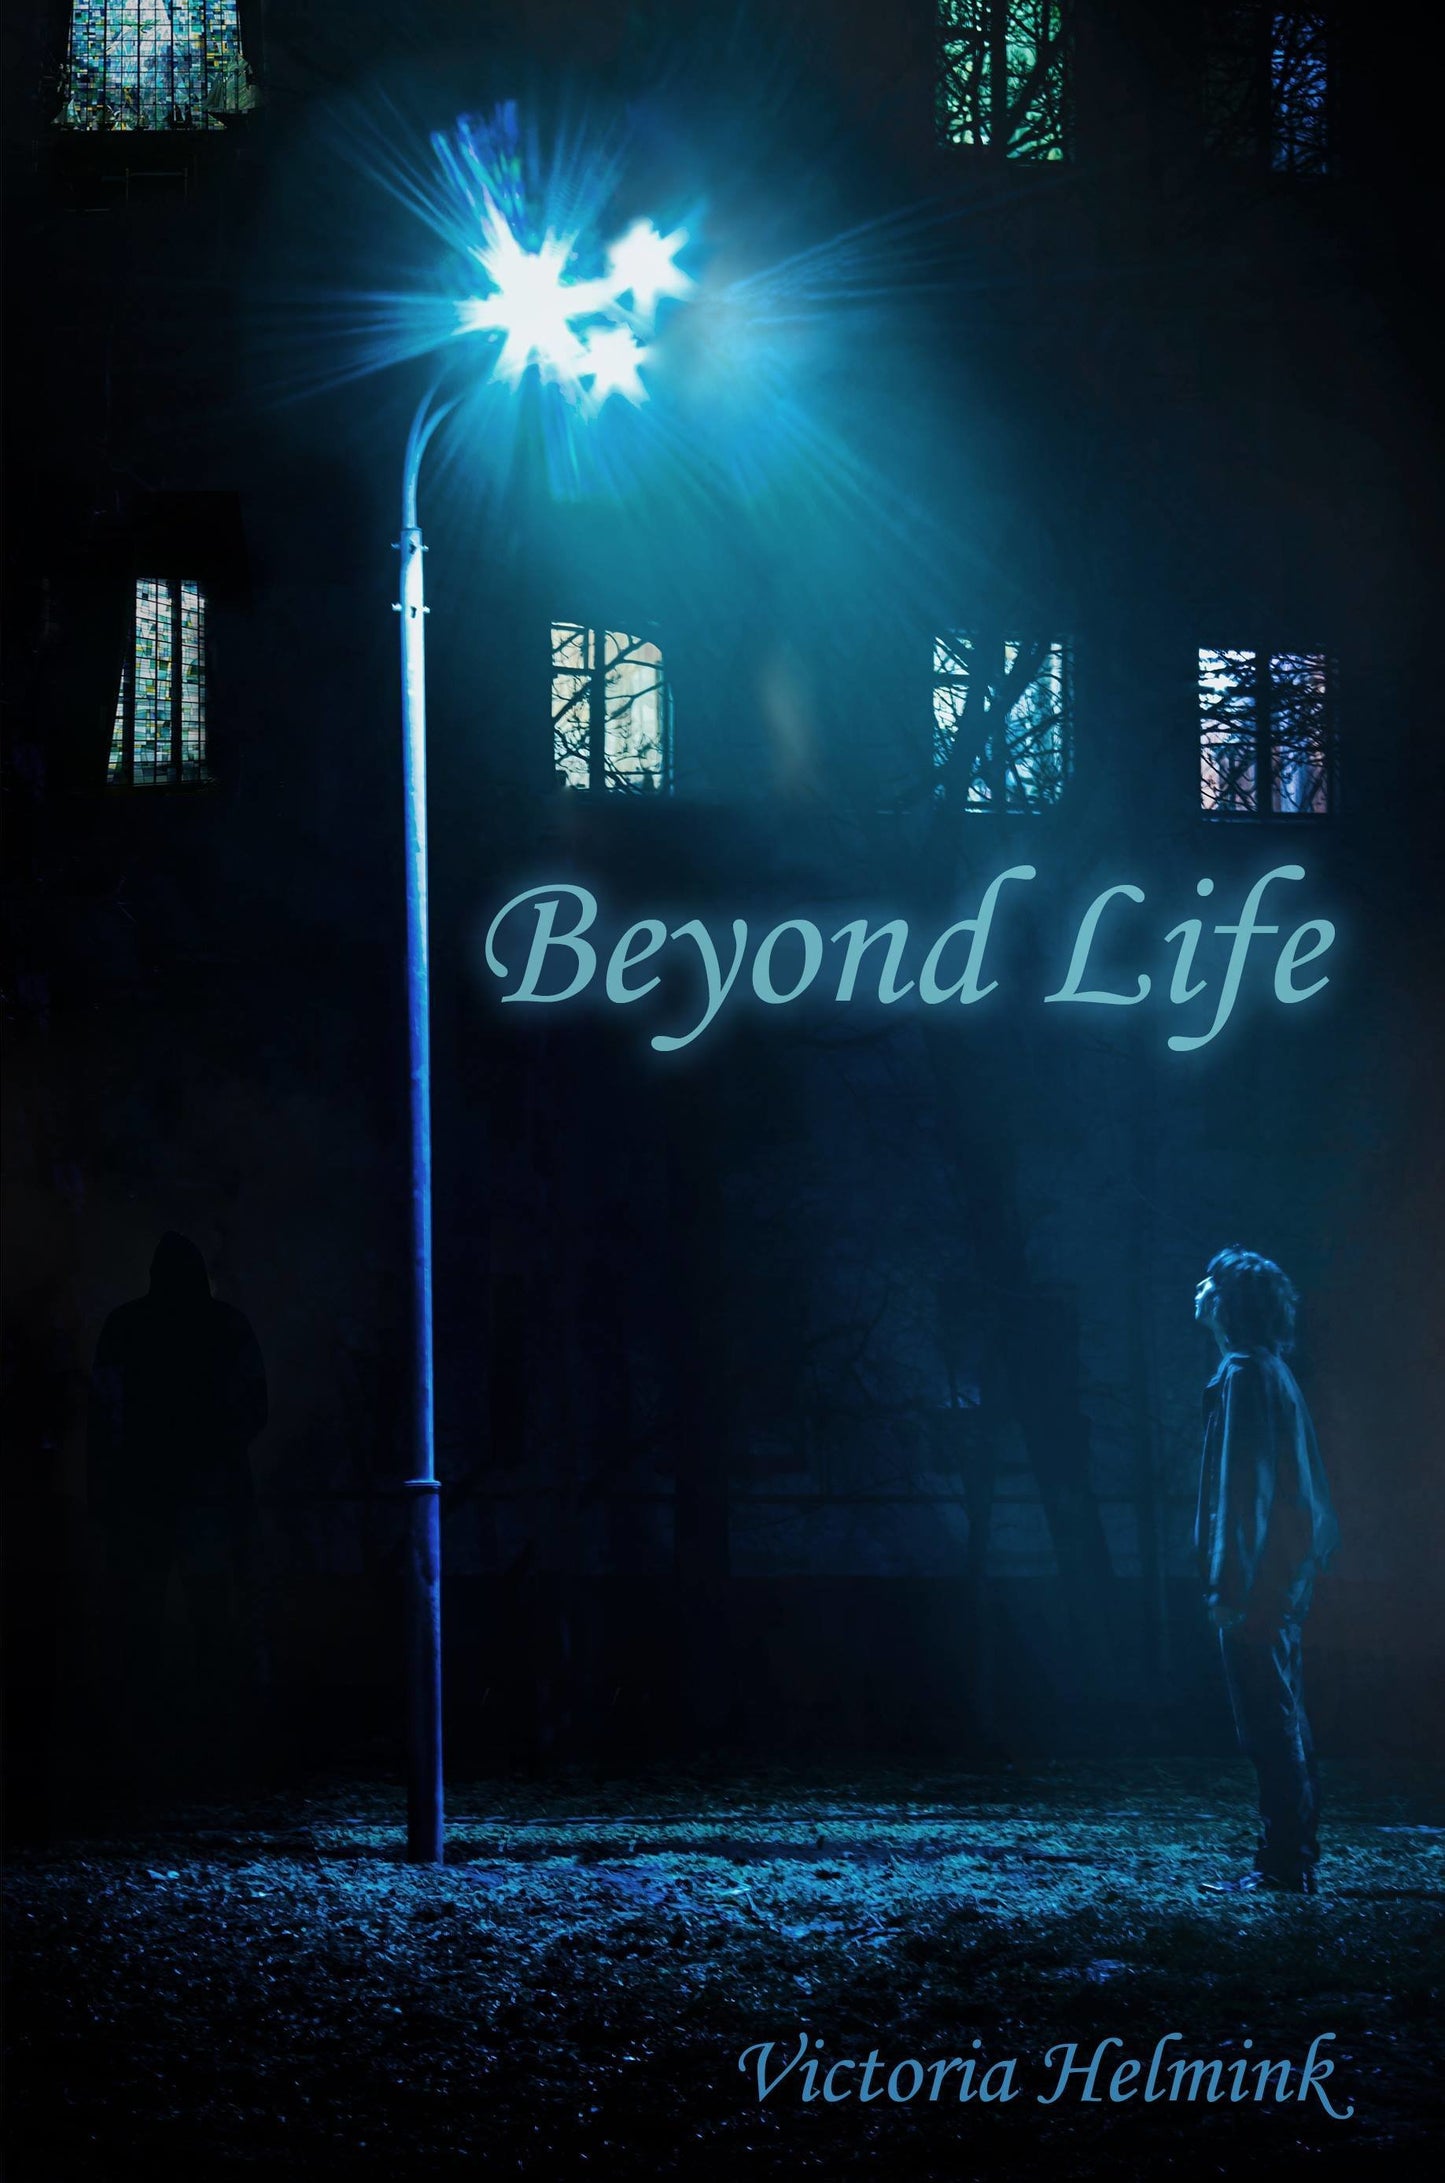 Beyond Life by Victoria Helmink (Ebook)